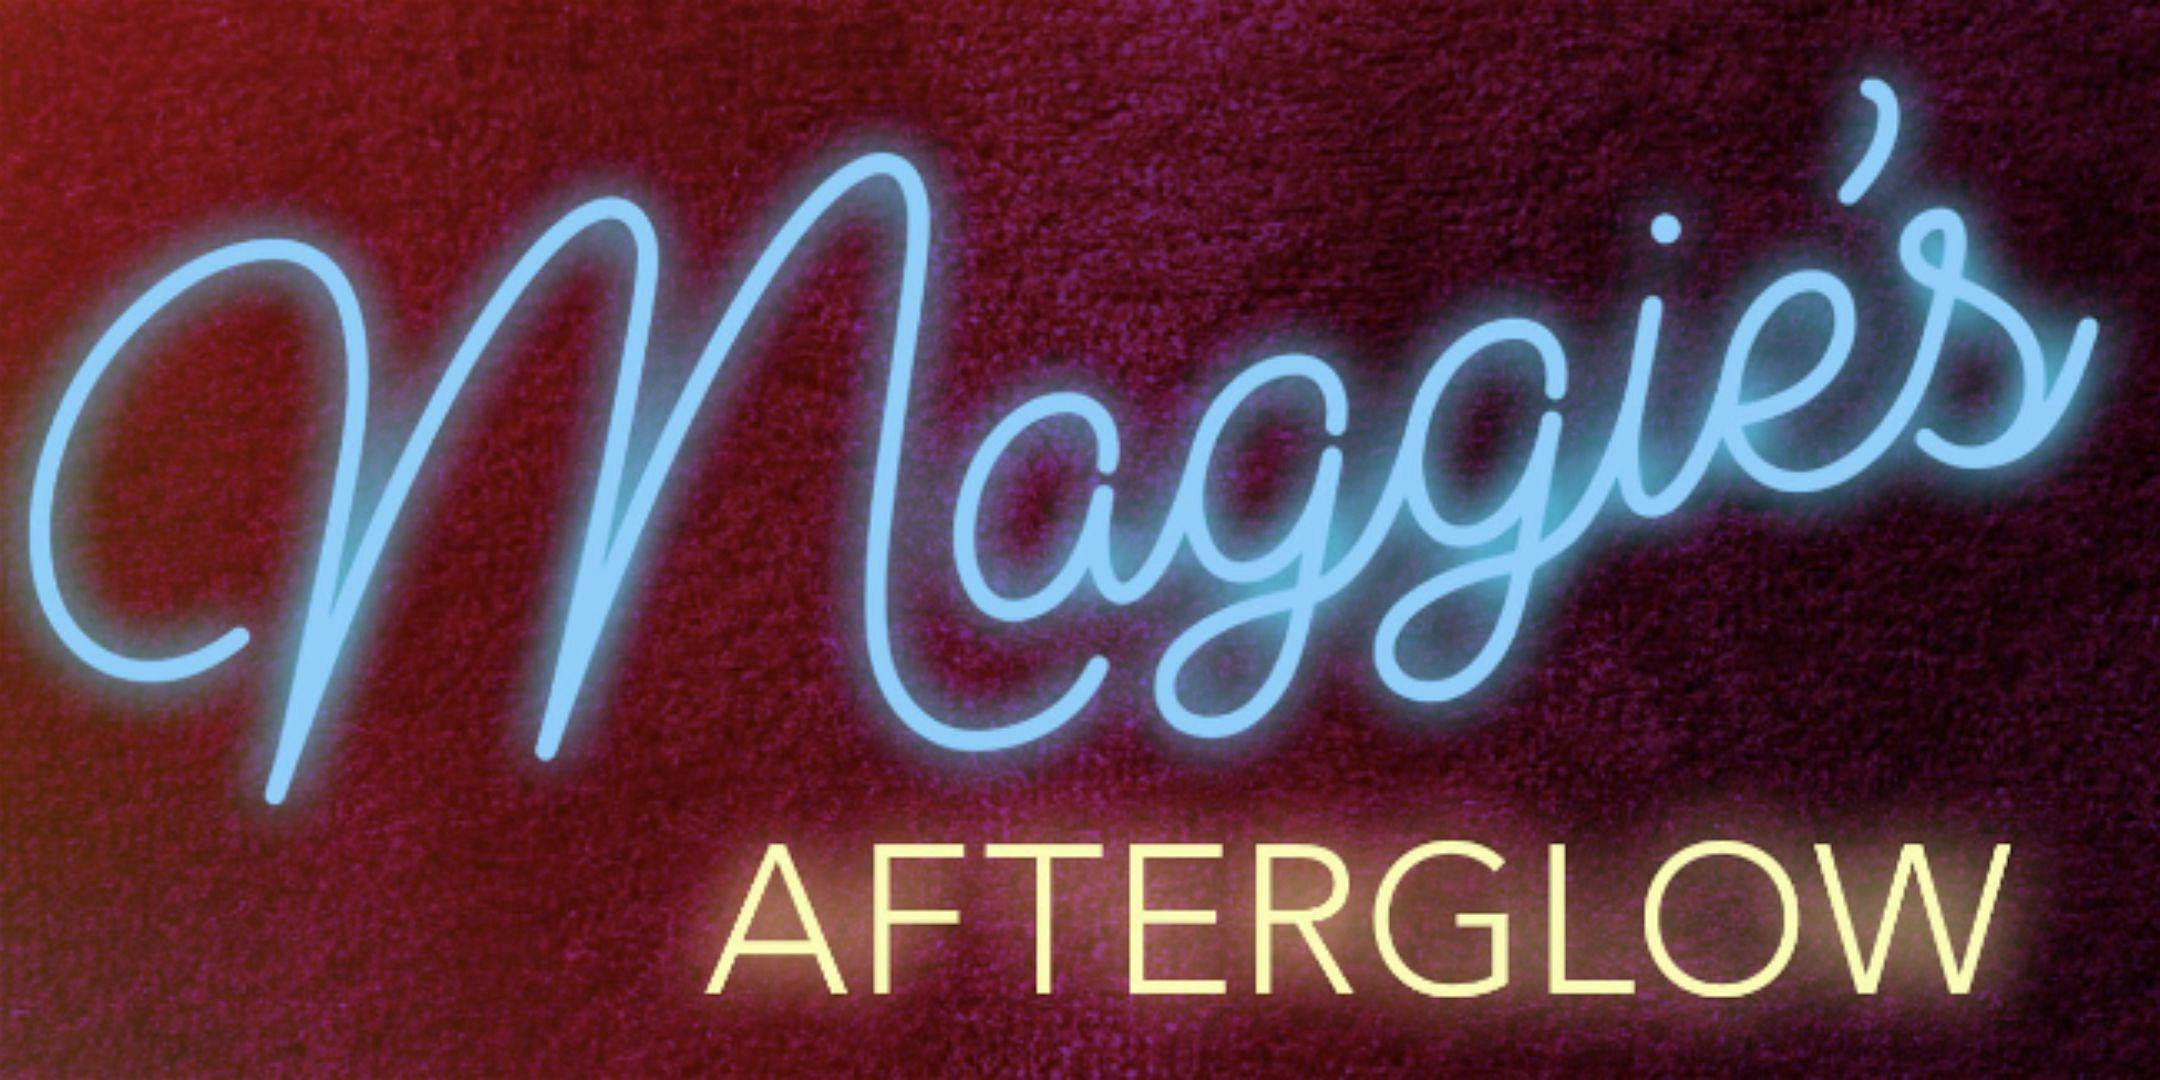 TCJazzFest: Maggie's Afterglow Scottie Miller